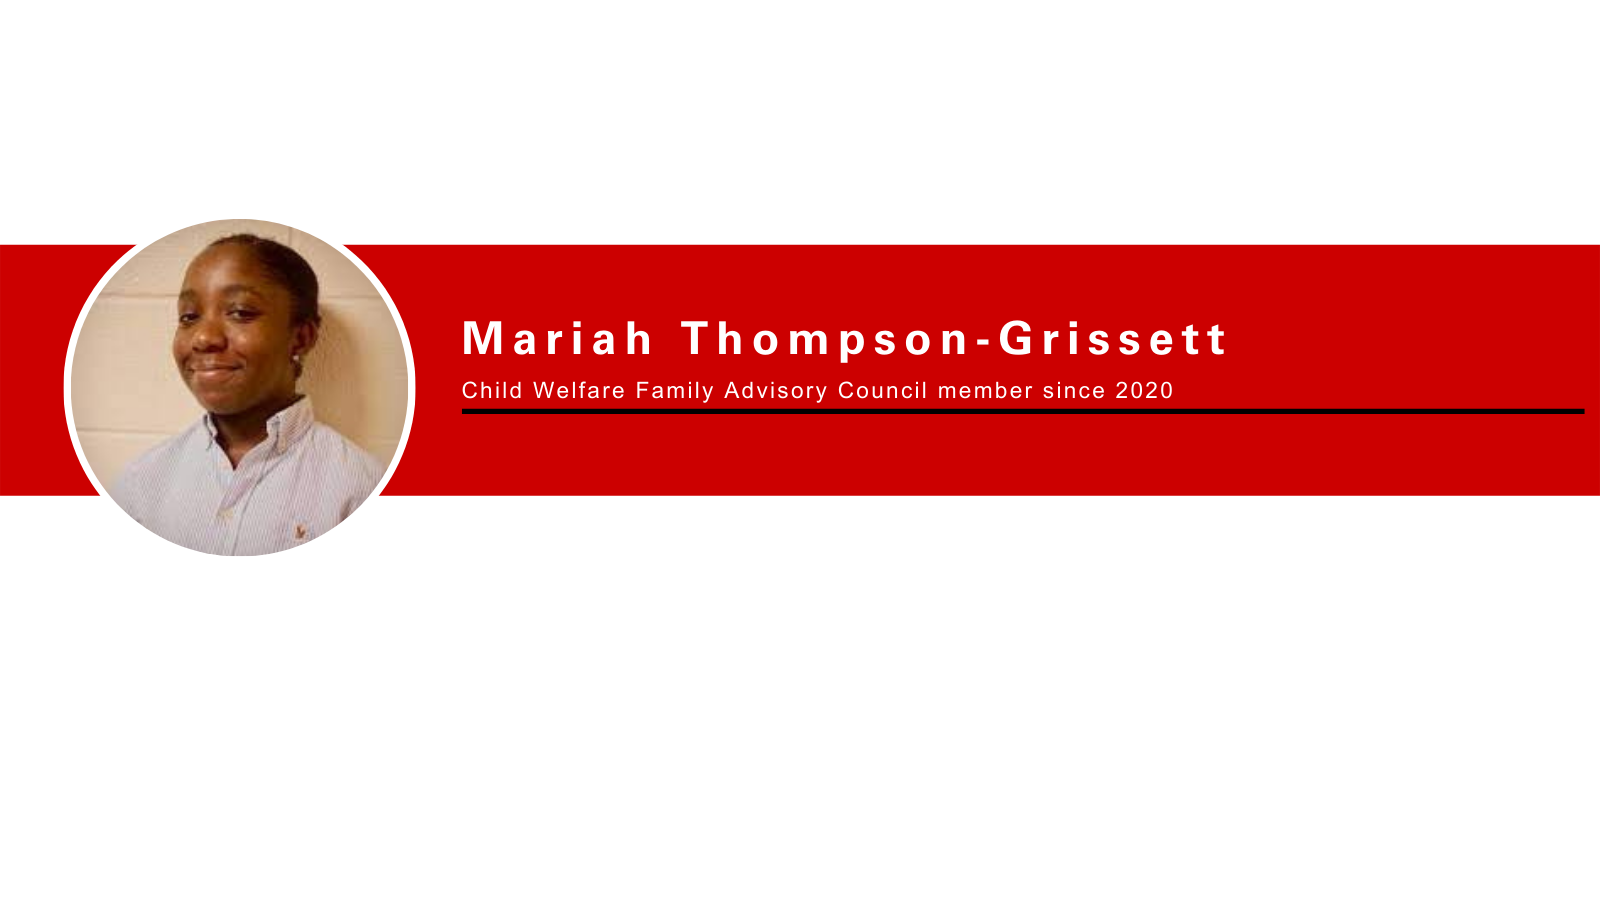 Meet Mariah Thompson-Grissett